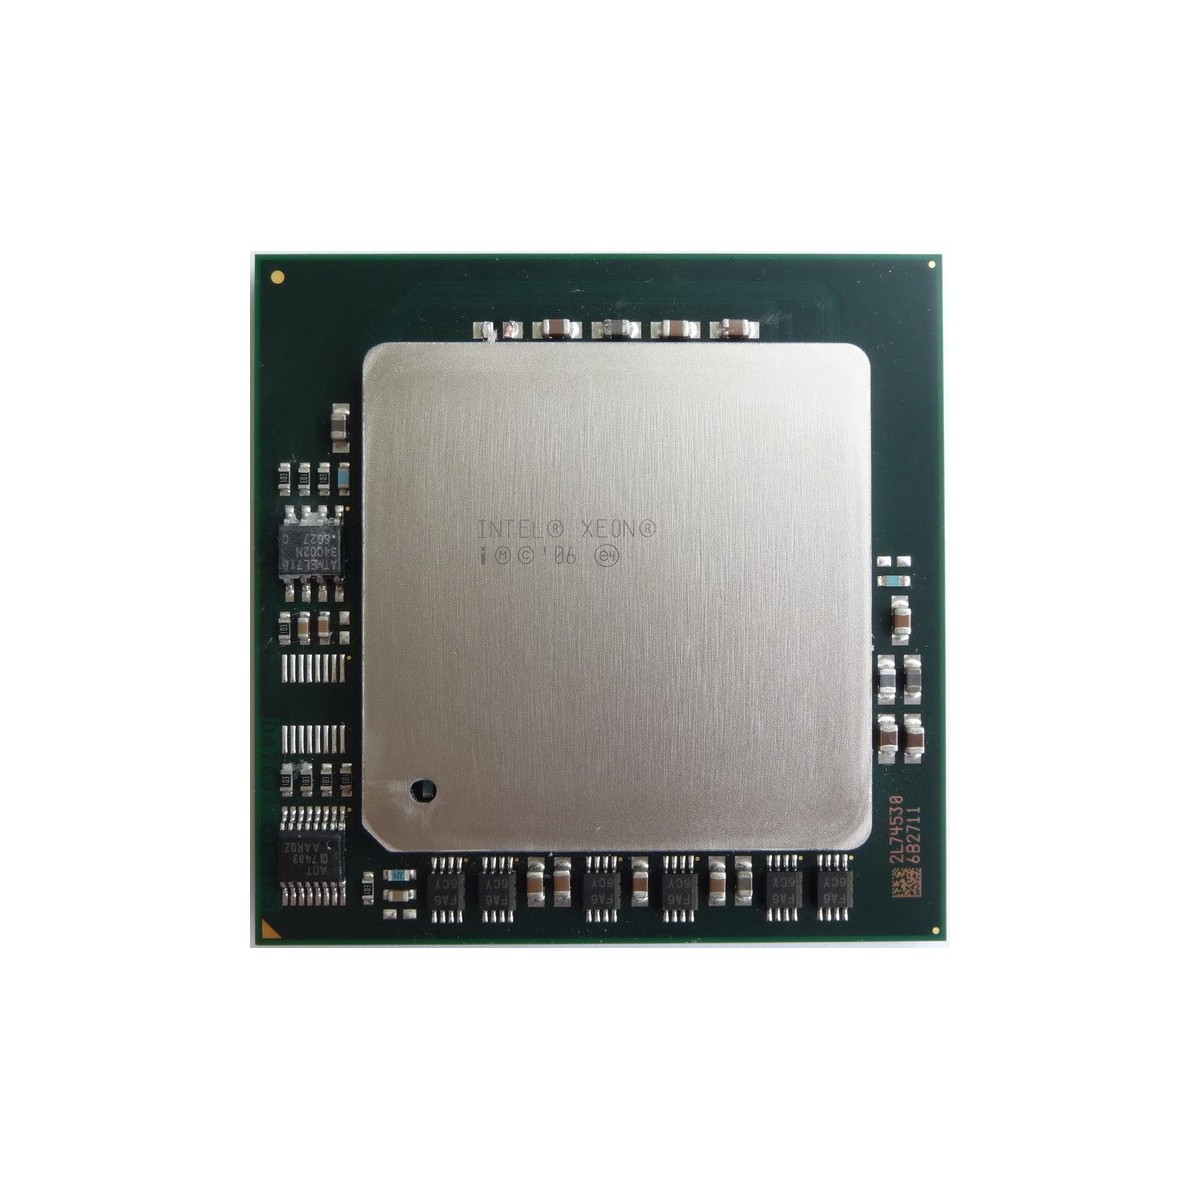 Intel Xeon 2.6GHZ Dual Core 7110M 4M Cache 800MHZ